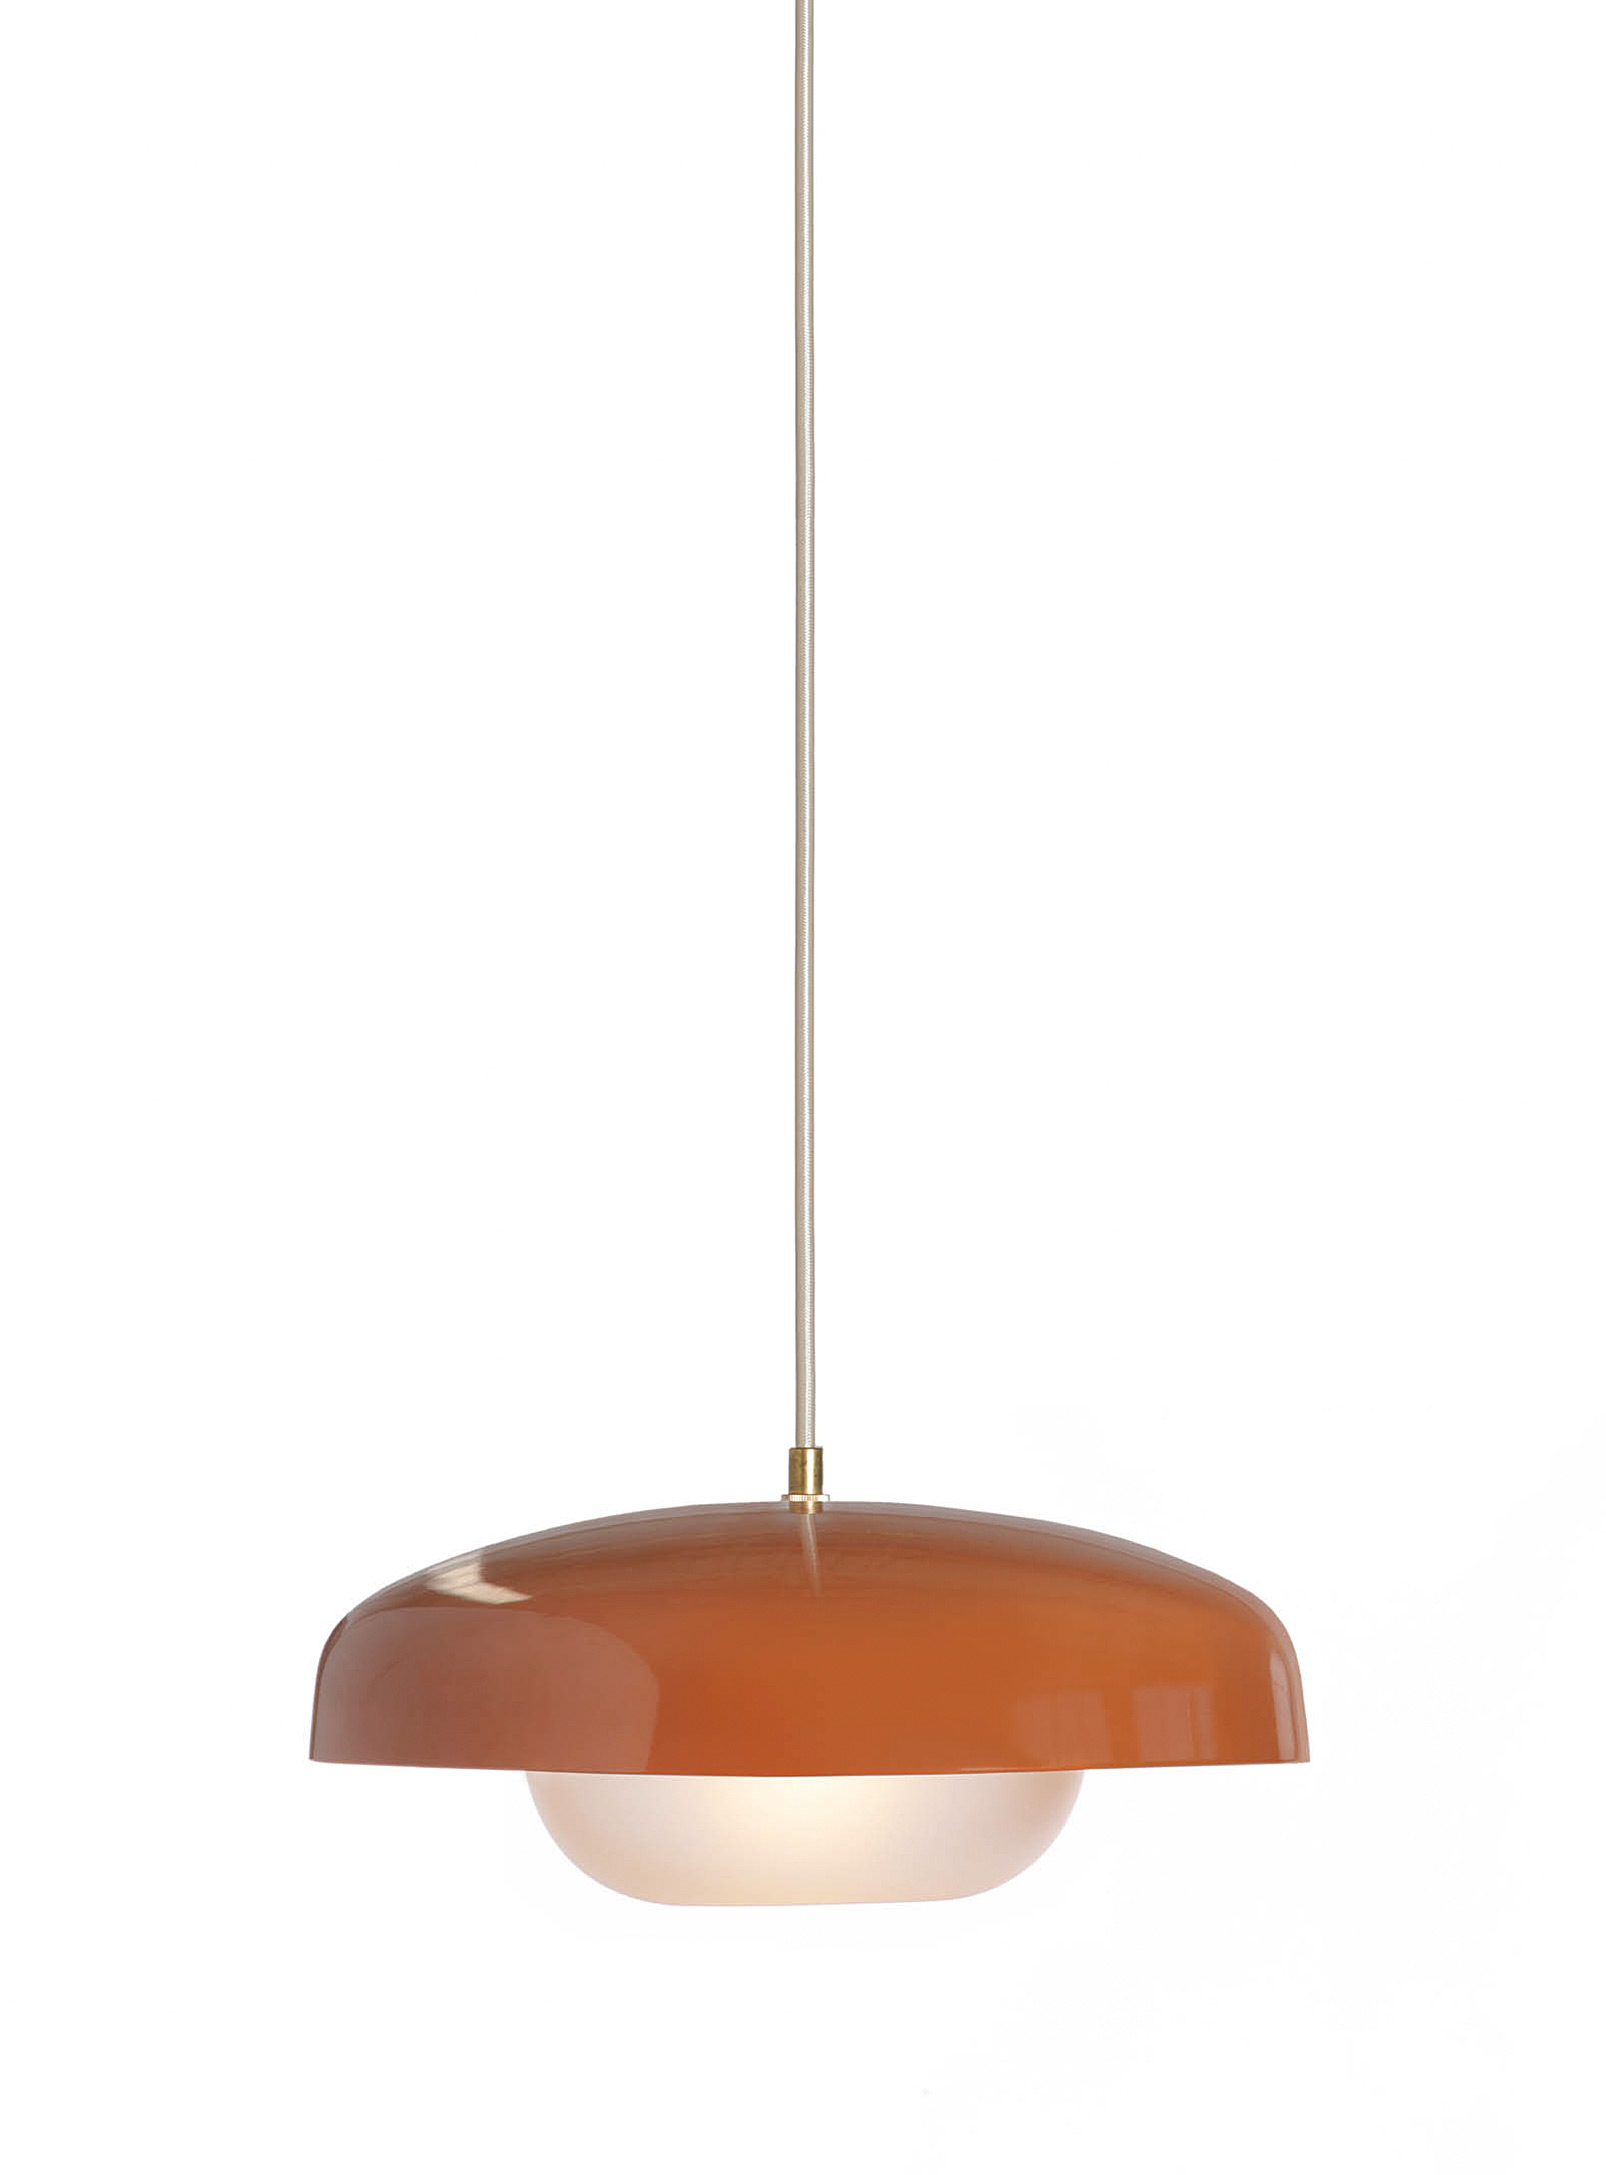 Luminaire Authentik Large Yoko Hanging Lamp In Medium Orange